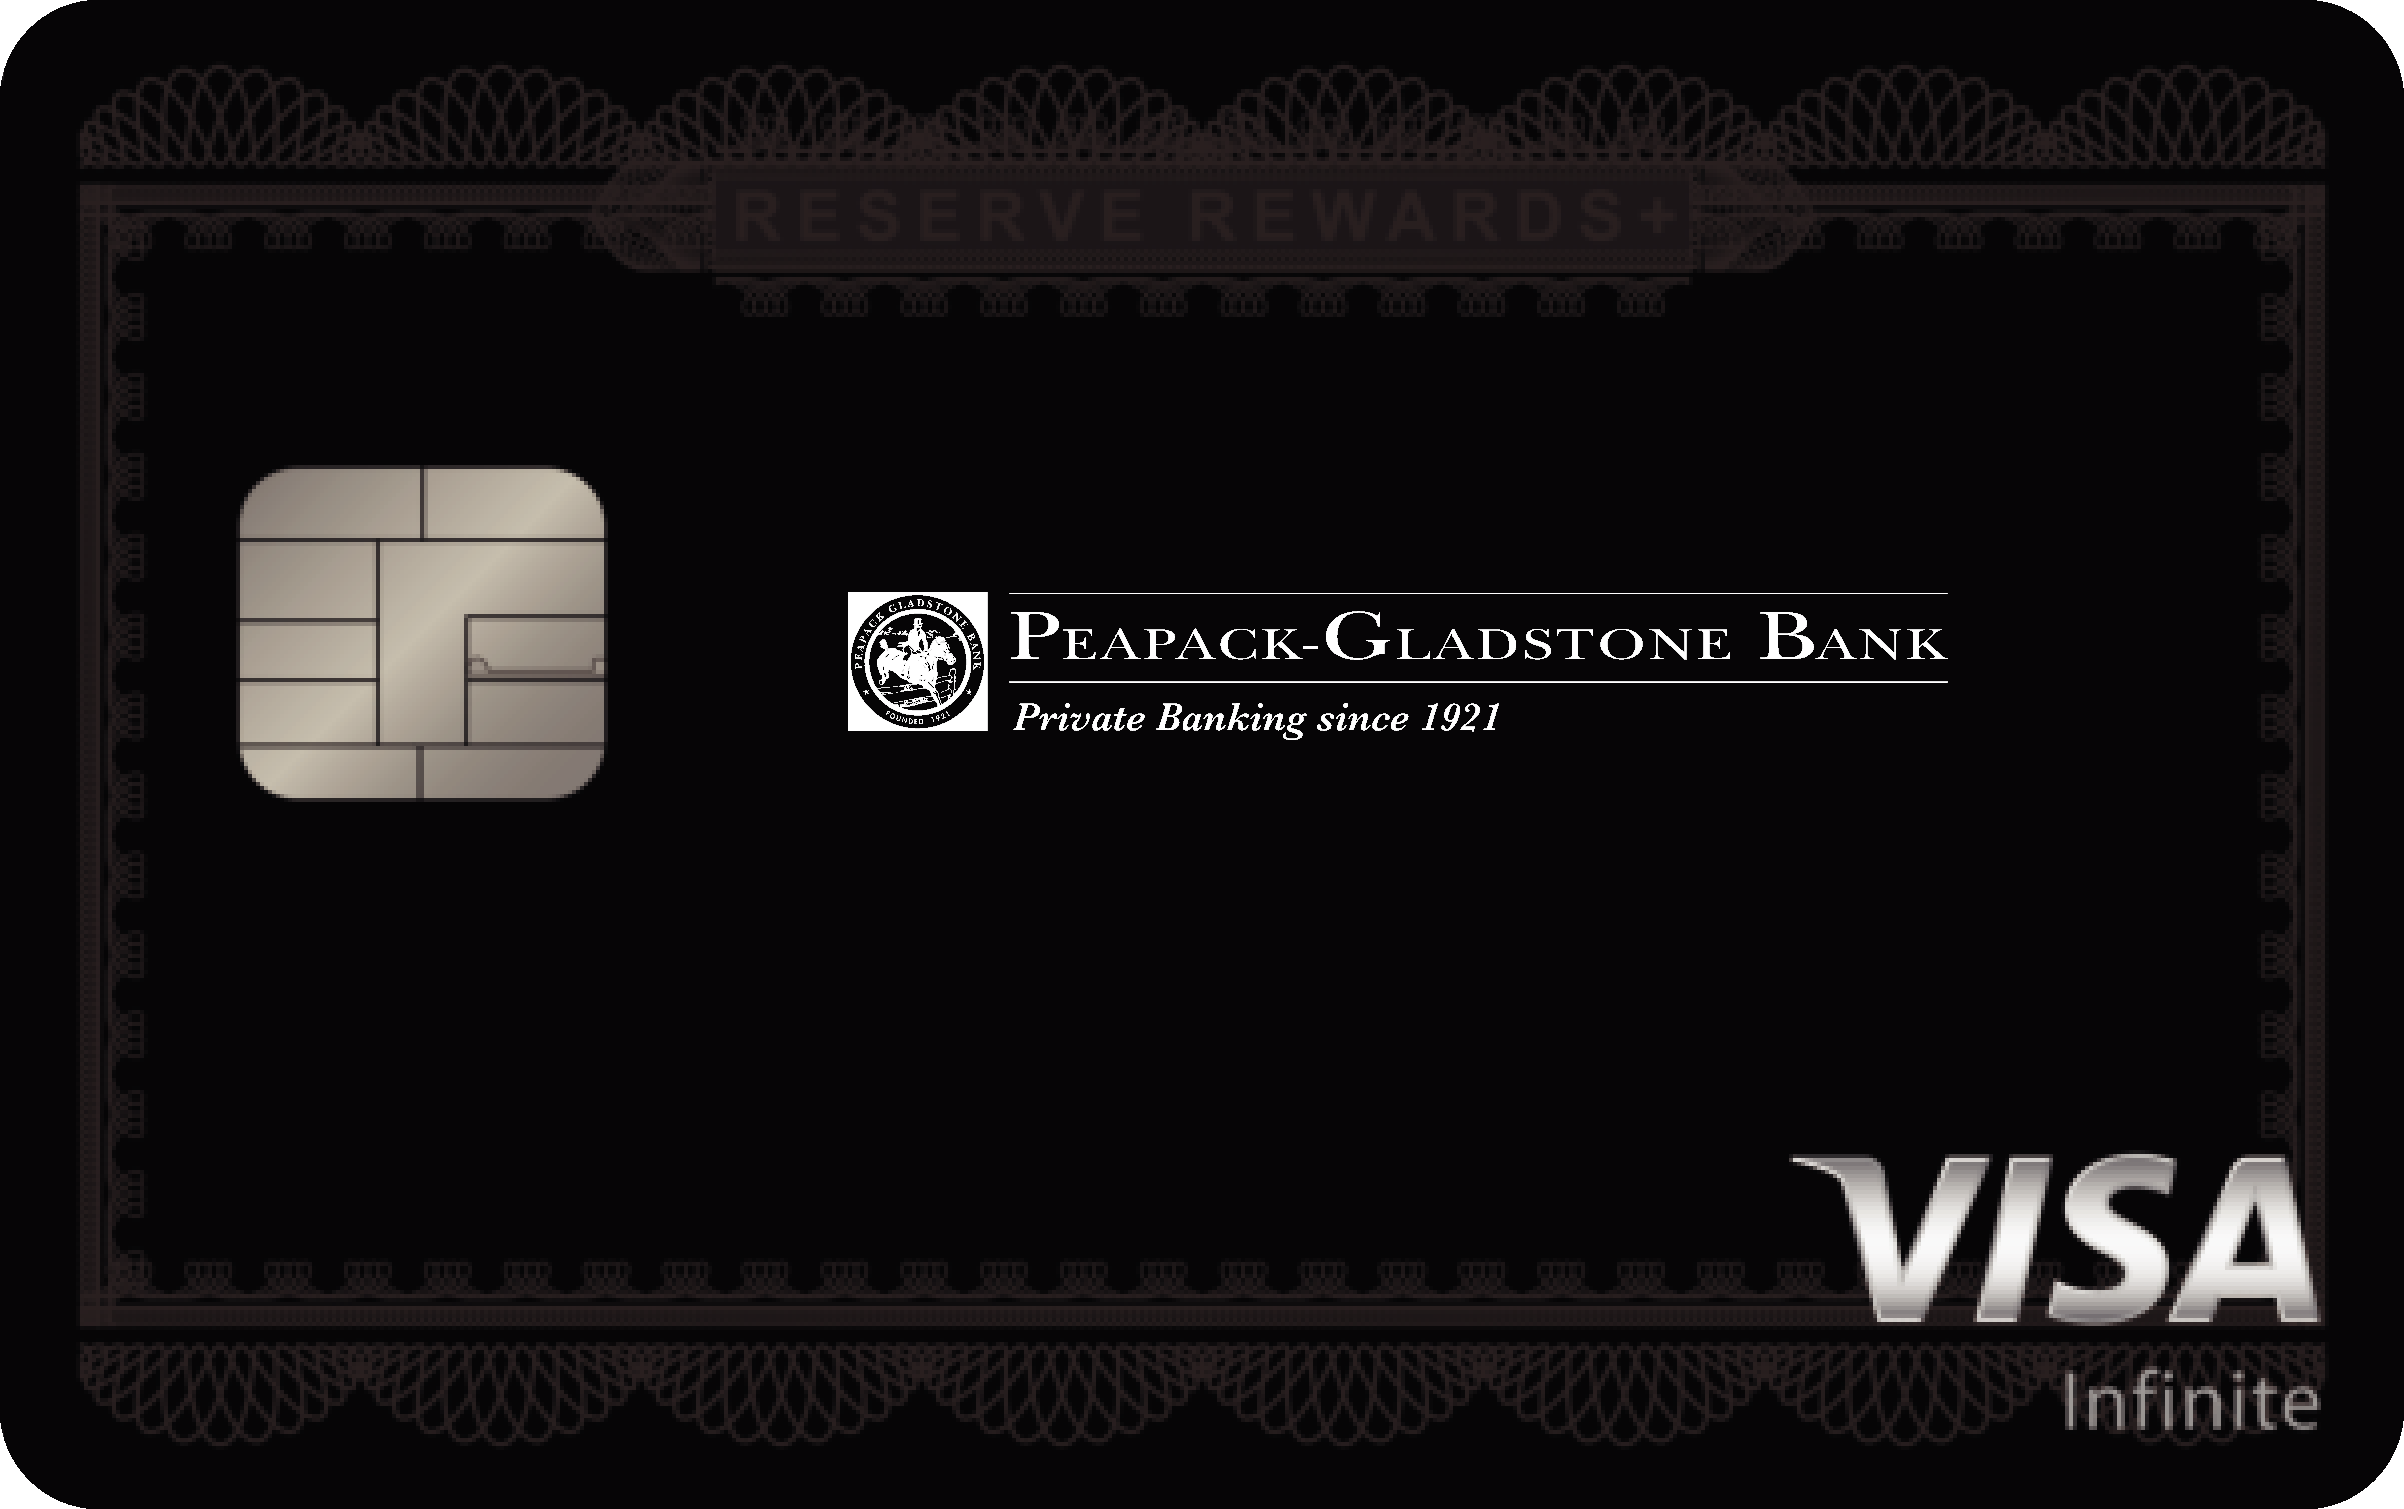 Peapack-Gladstone Bank